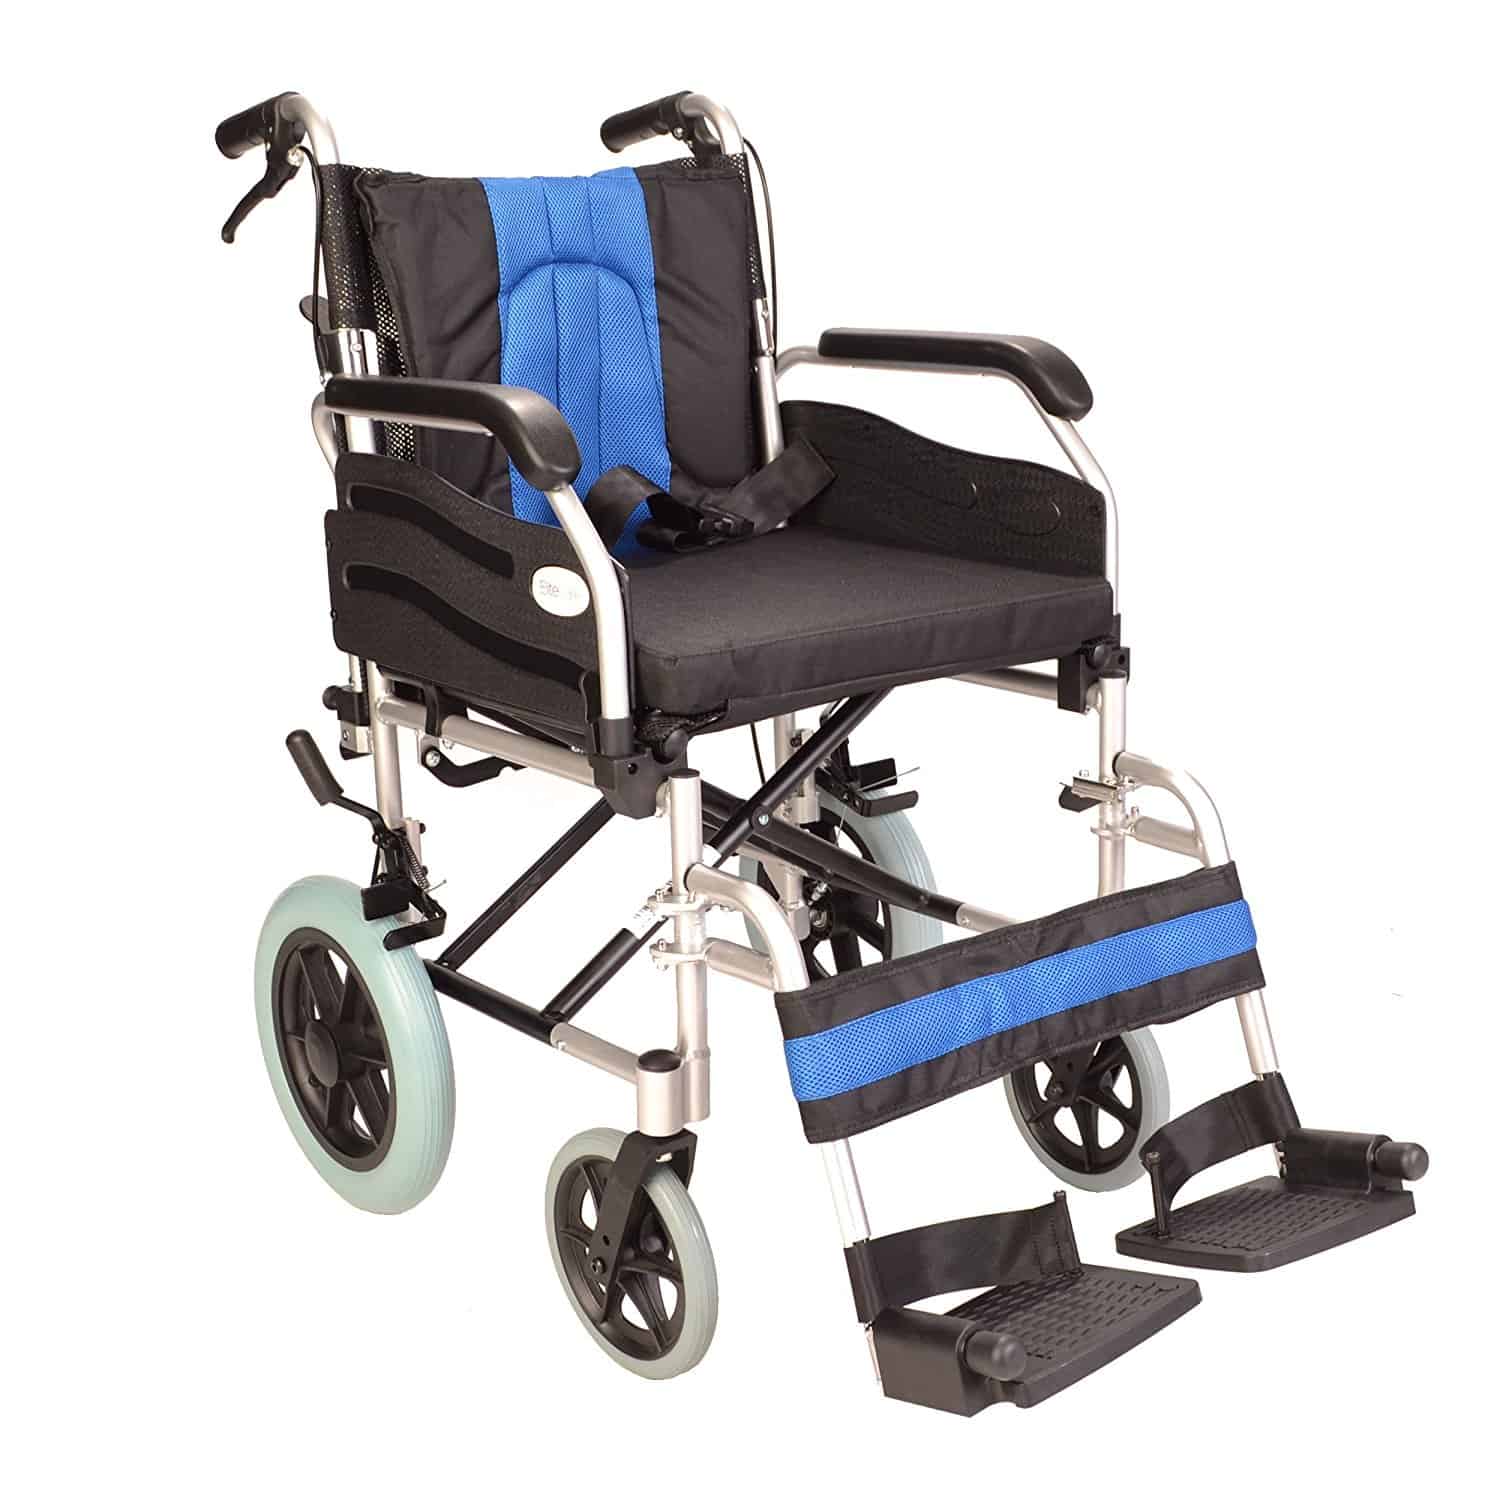 Lightweight folding deluxe aluminium transit wheelchair with handbrakes